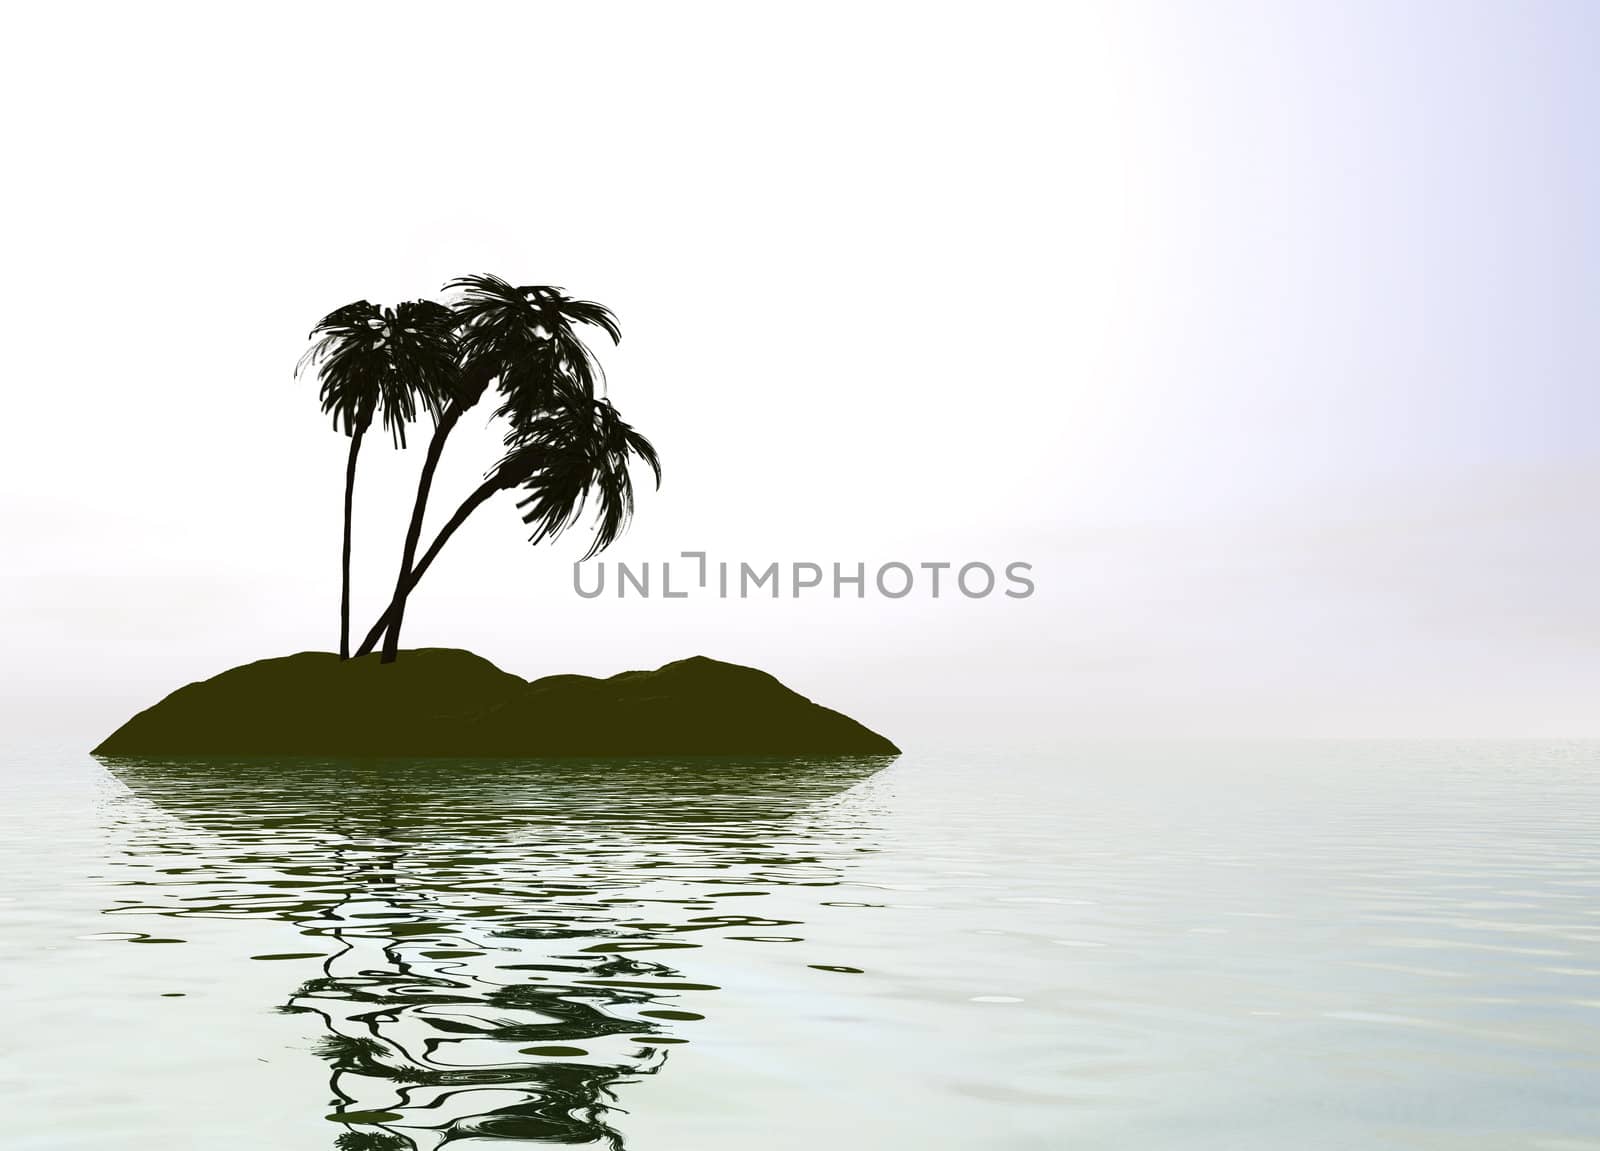 Romantic Desert Island with Palm Tree against the Horizon